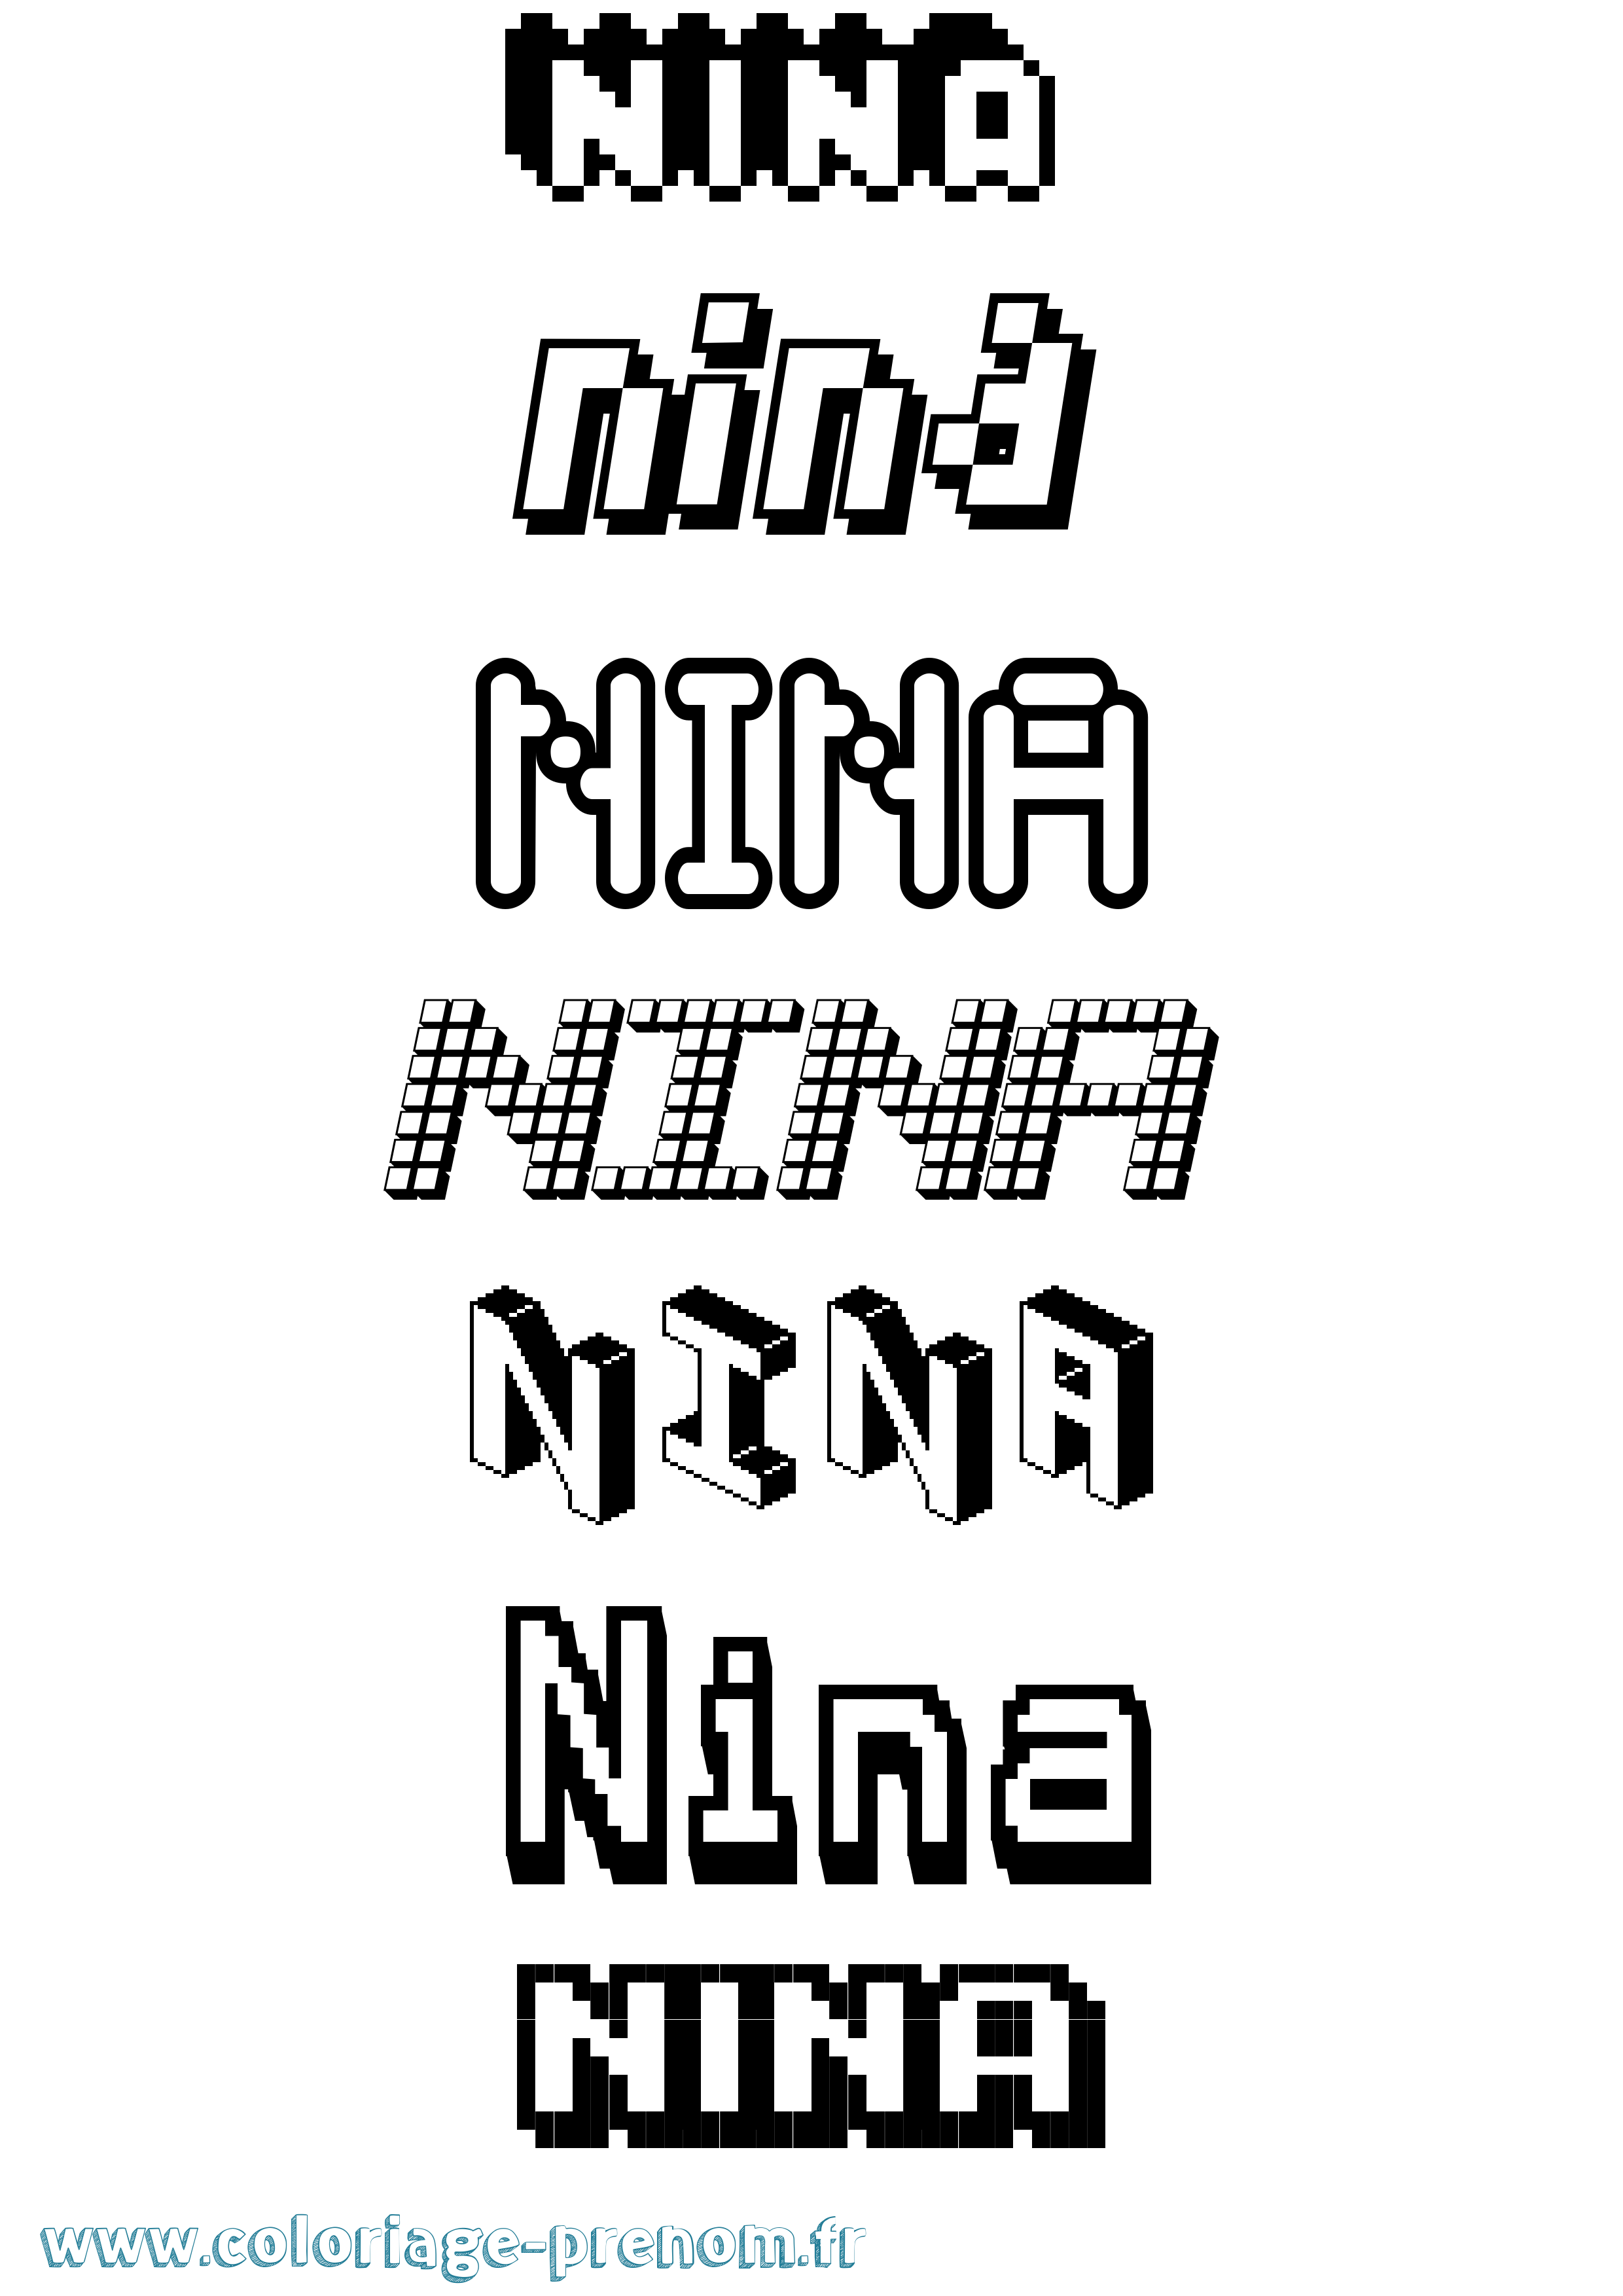 Coloriage prénom Nina Pixel